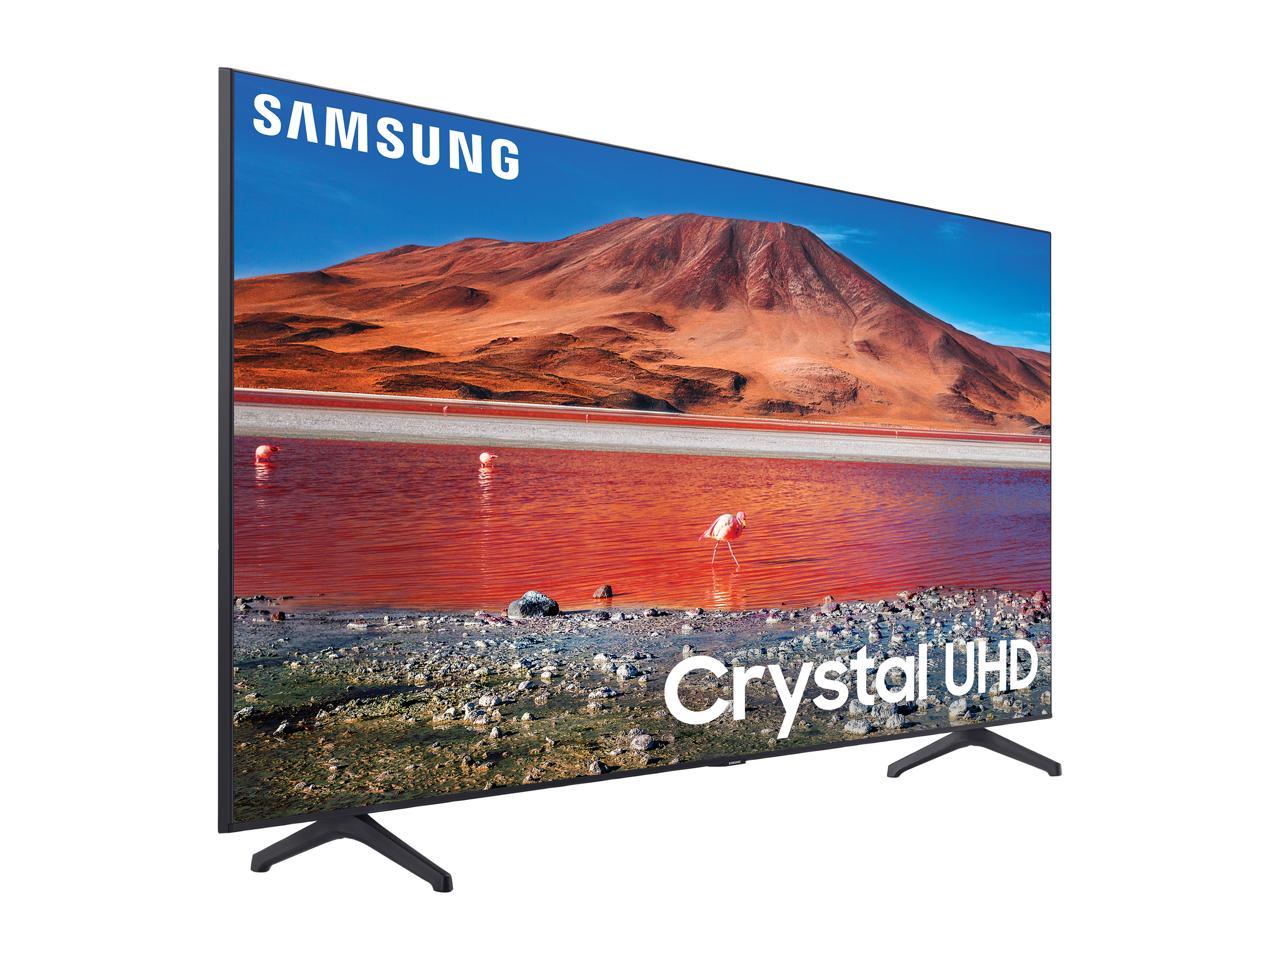 Samsung Un65tu7000fxza 65 Class Tu7000 Crystal Uhd 4k Smart Tv 2020 0393